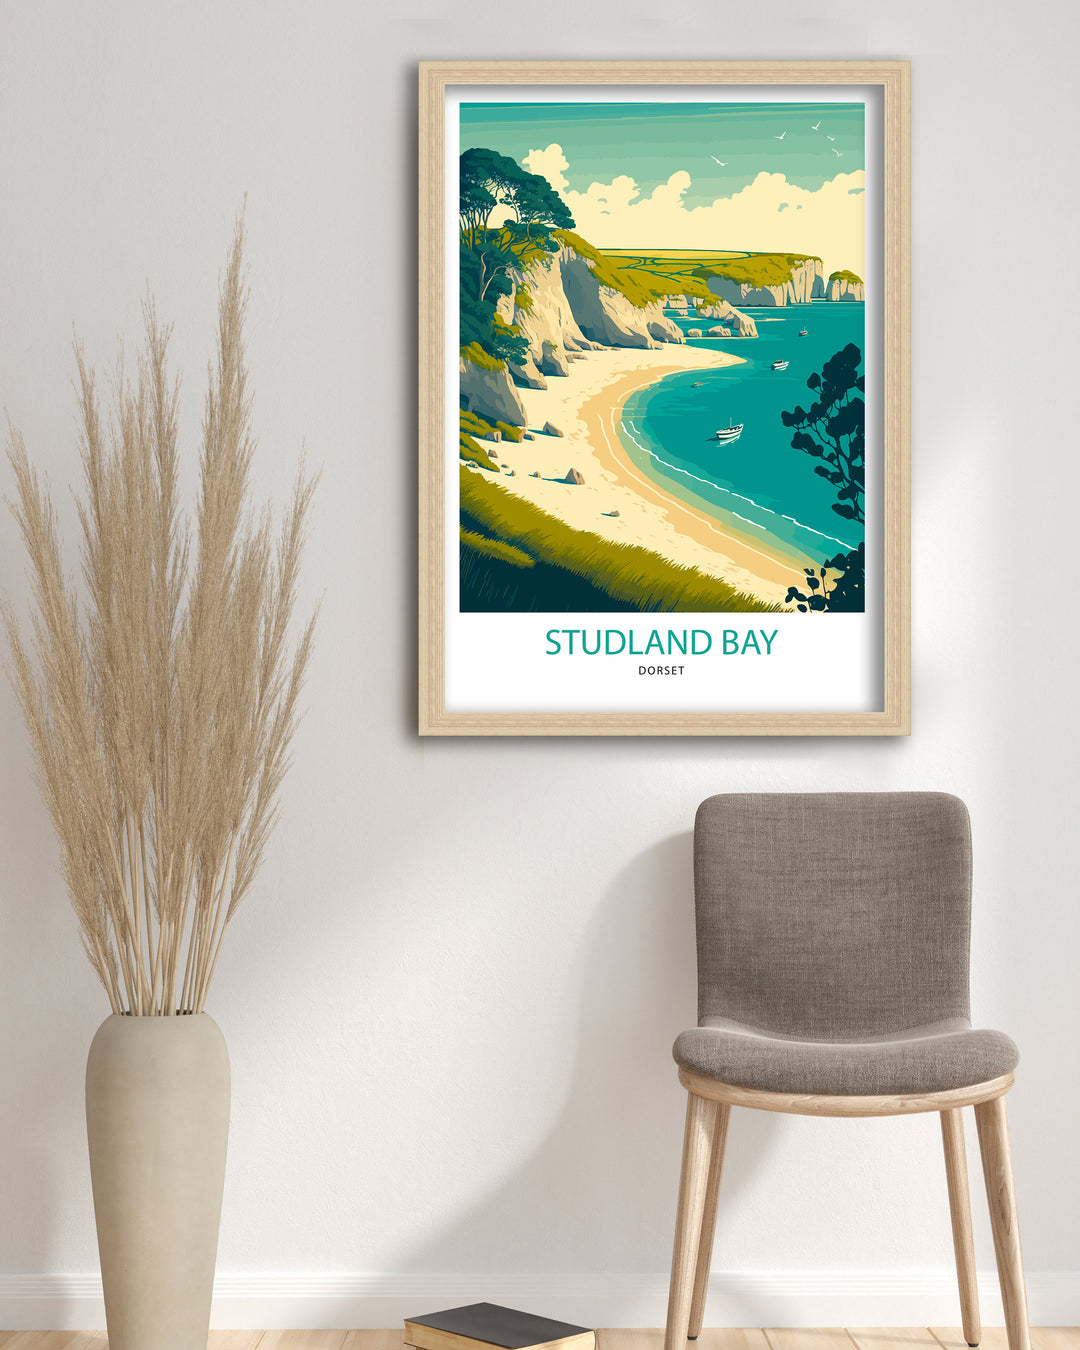 Studland Bay Travel Poster | Dorset